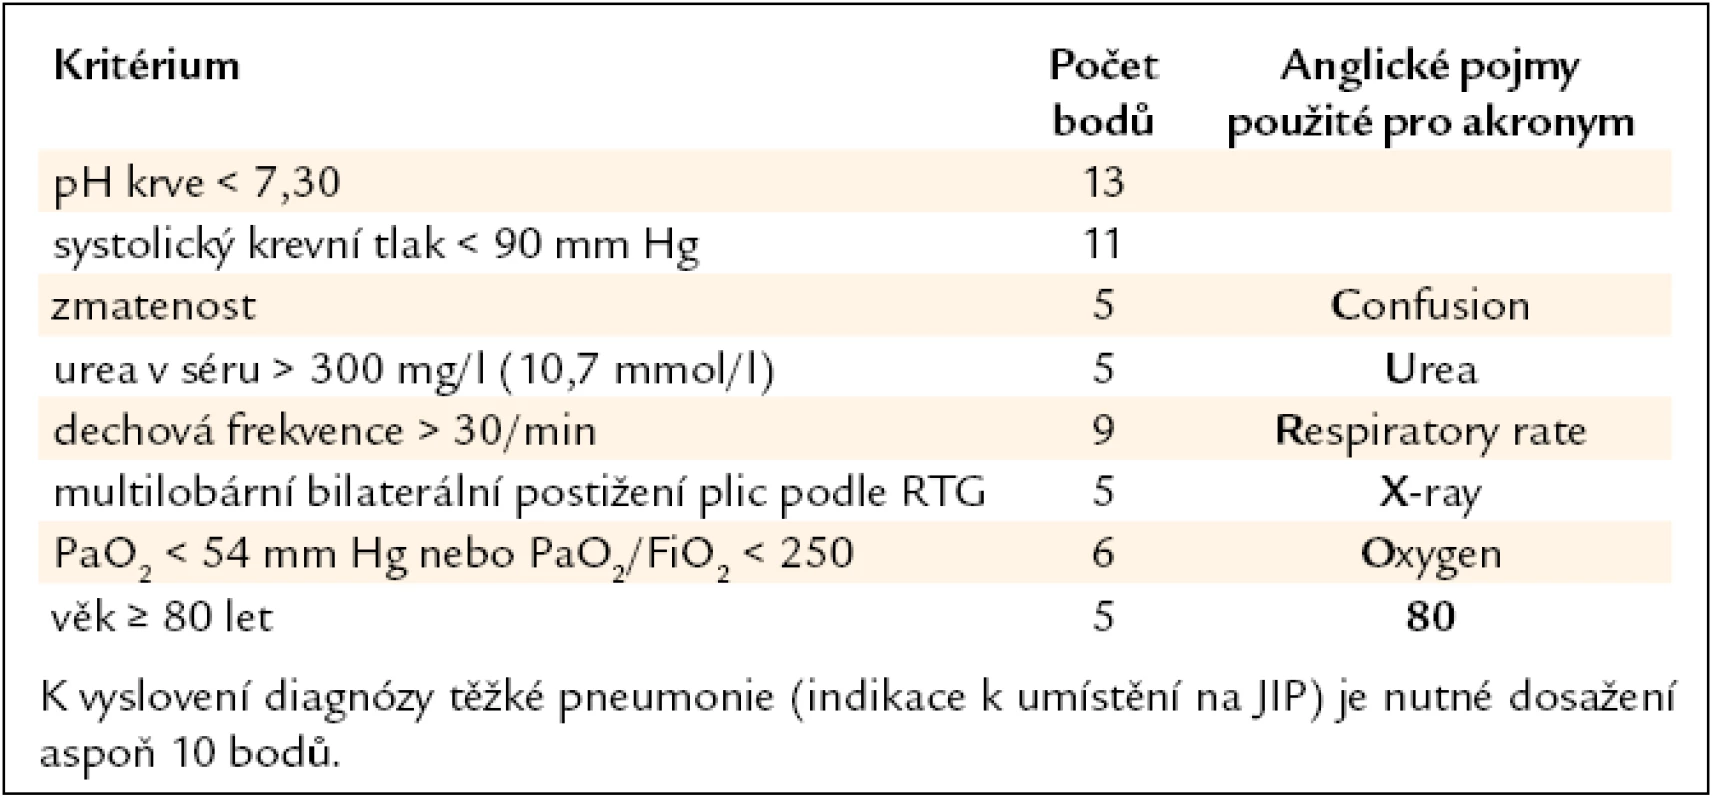 Kritéria těžké pneumonie podle systému CURXO-80 [33].